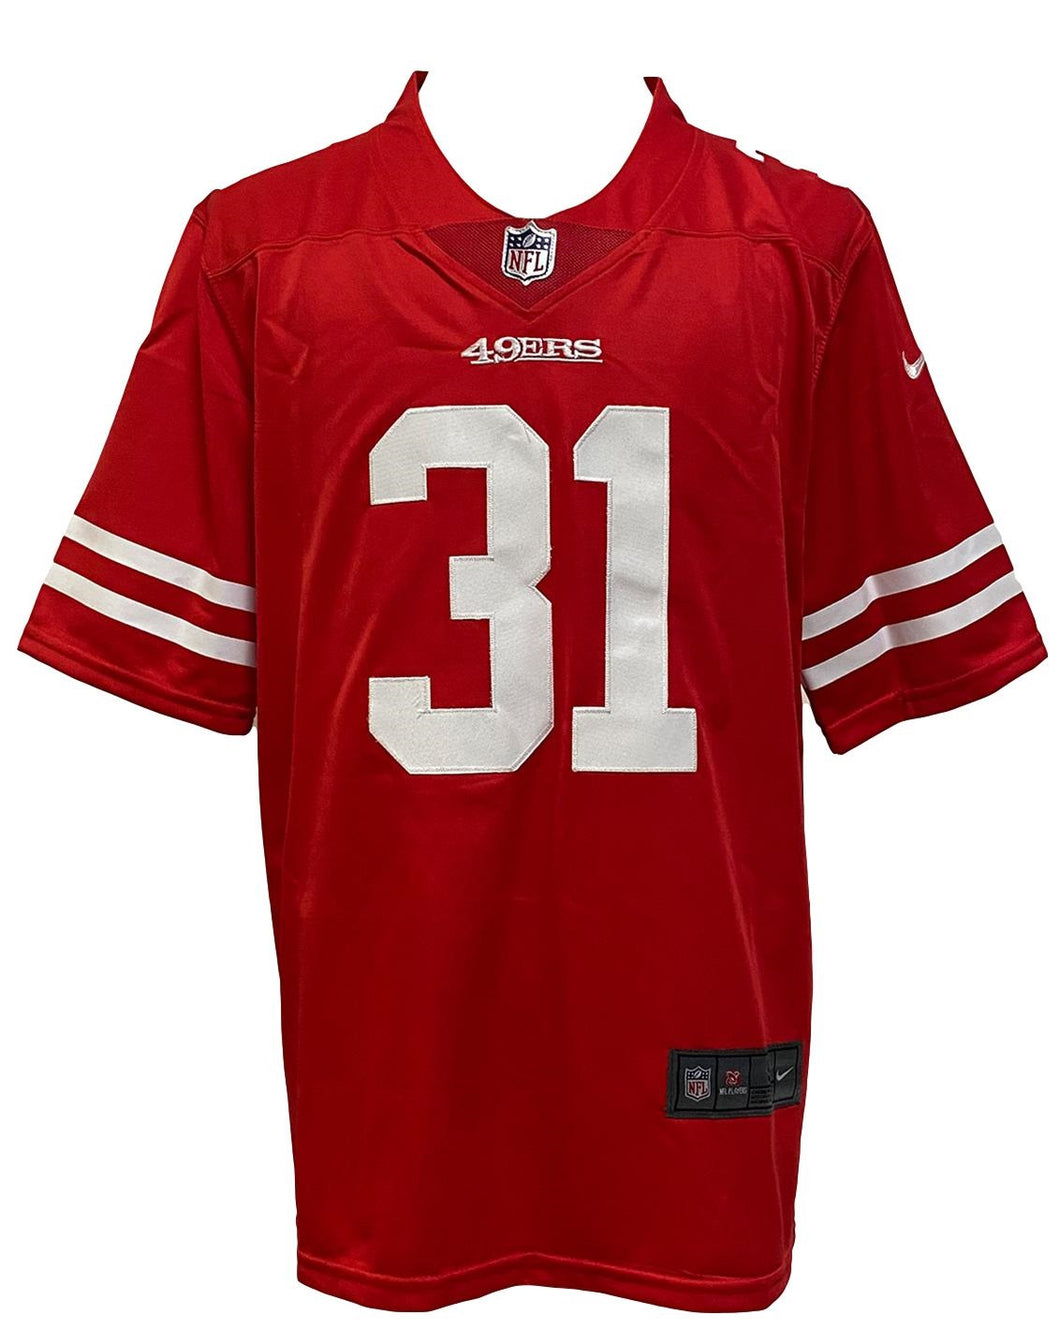 Camisa San Francisco Raheem Mostert #31 NFL